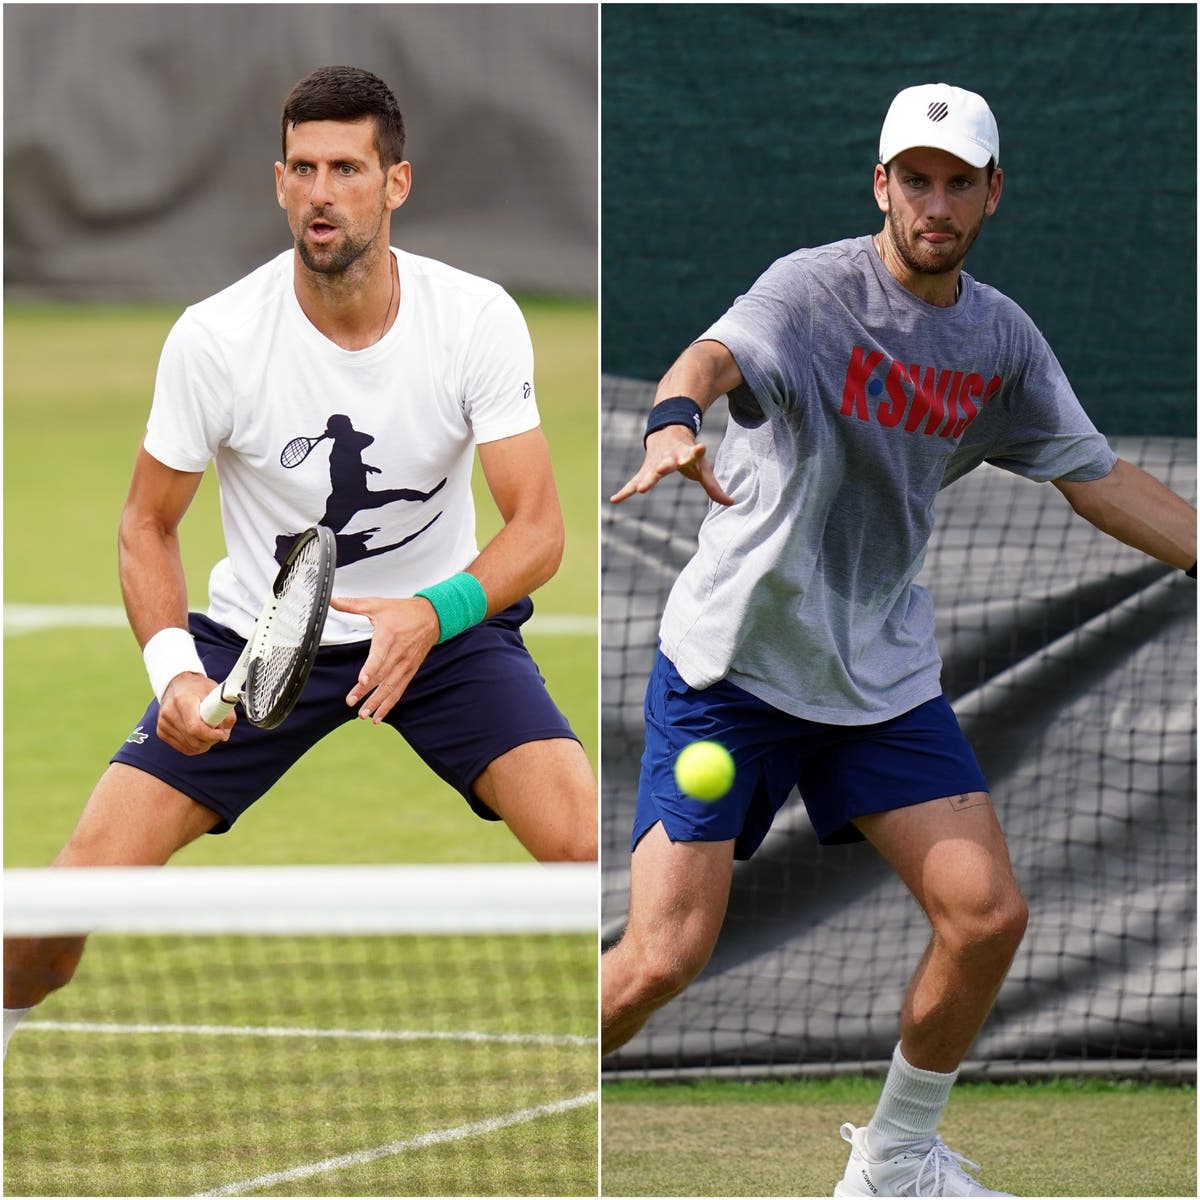 Wimbledon Day 12: Cameron affronta Novak Djokovic mentre Nick Kyrgios attende